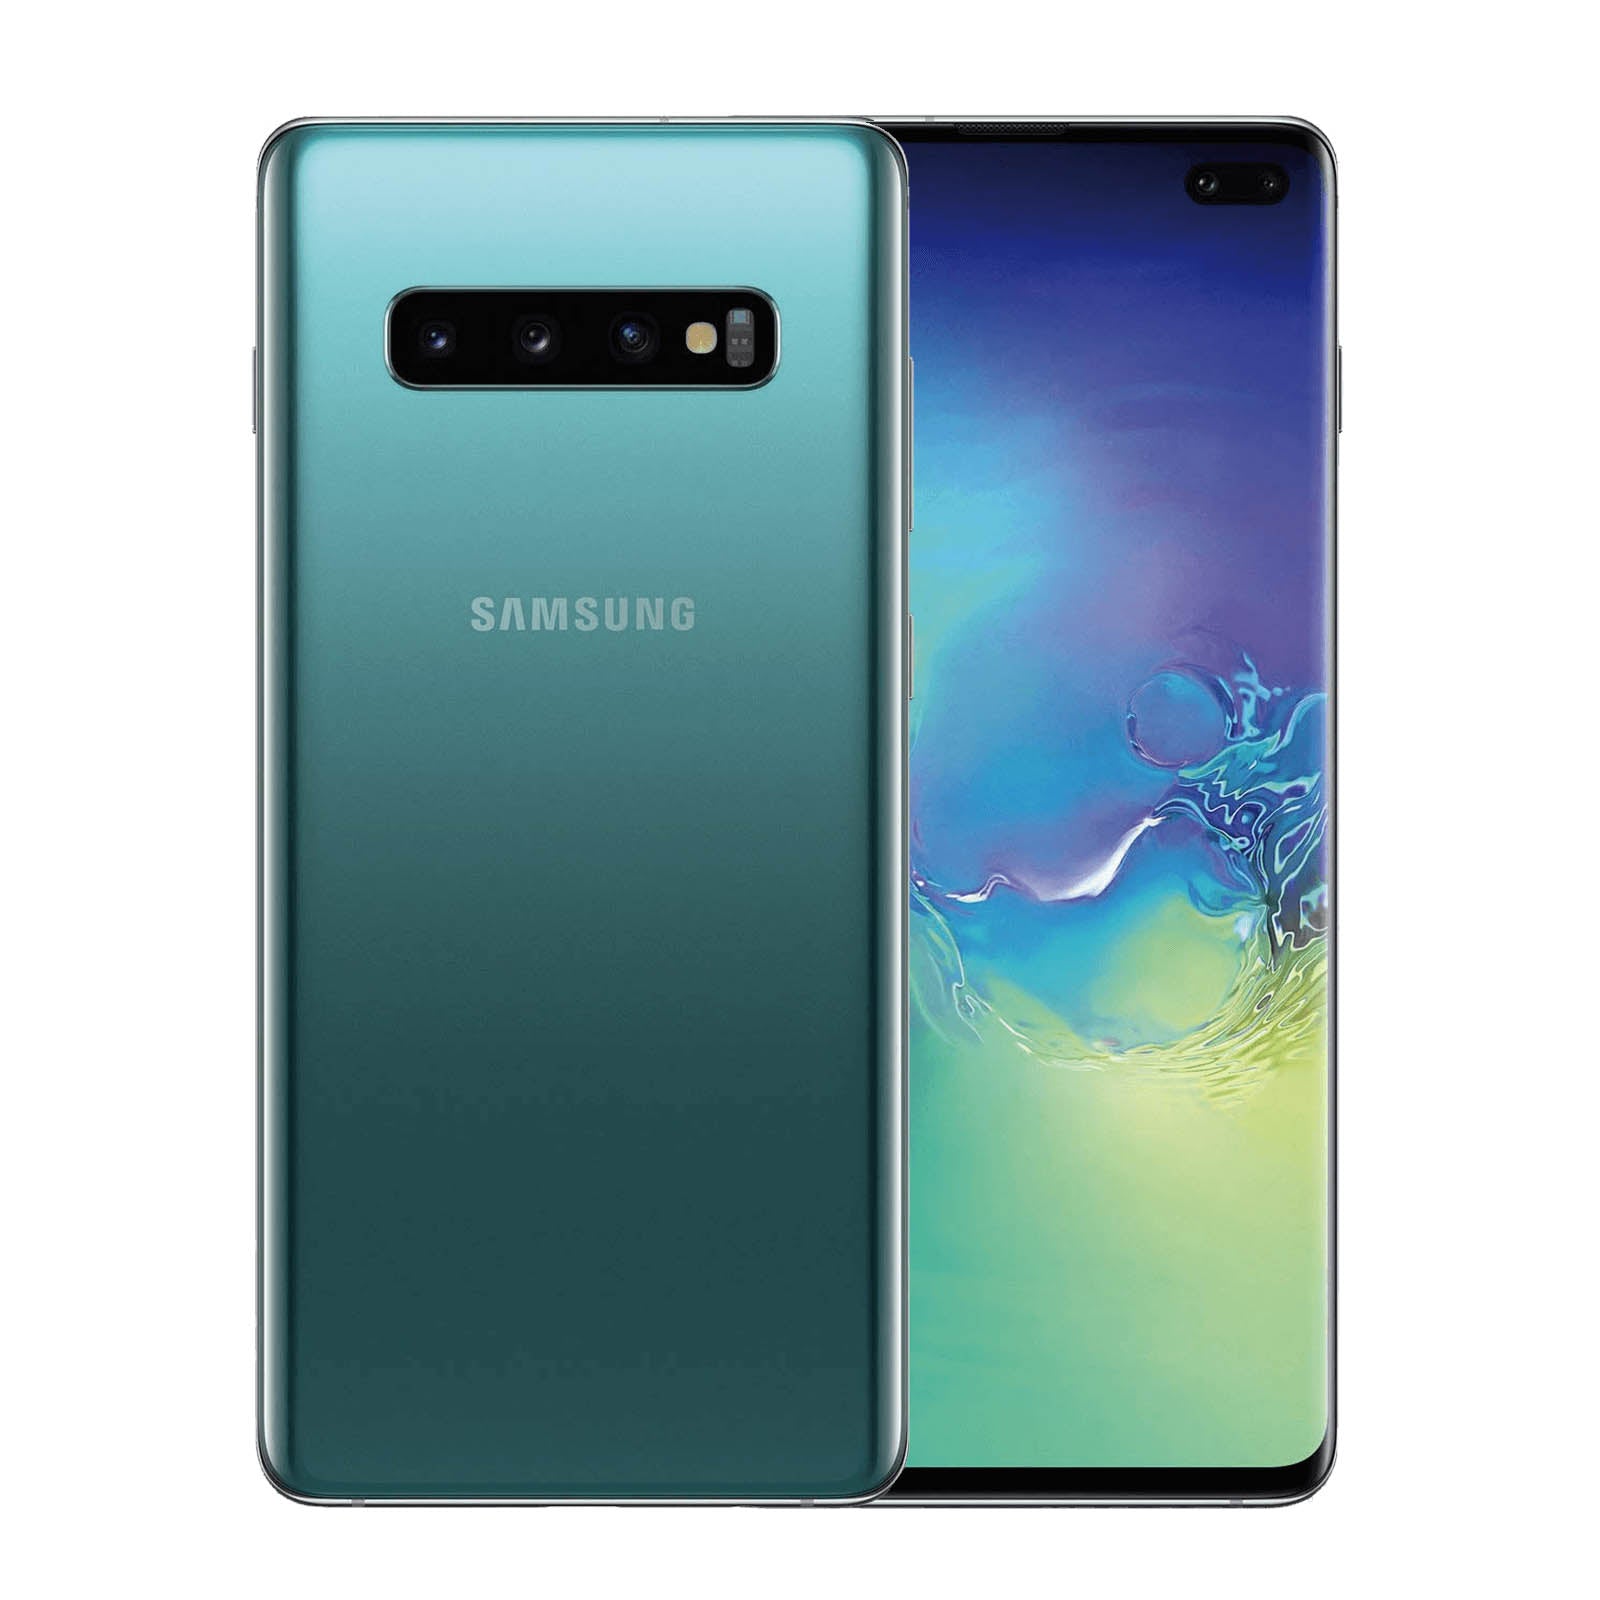 Samsung Galaxy S10 Plus 001TB Prism Green Good - Unlocked